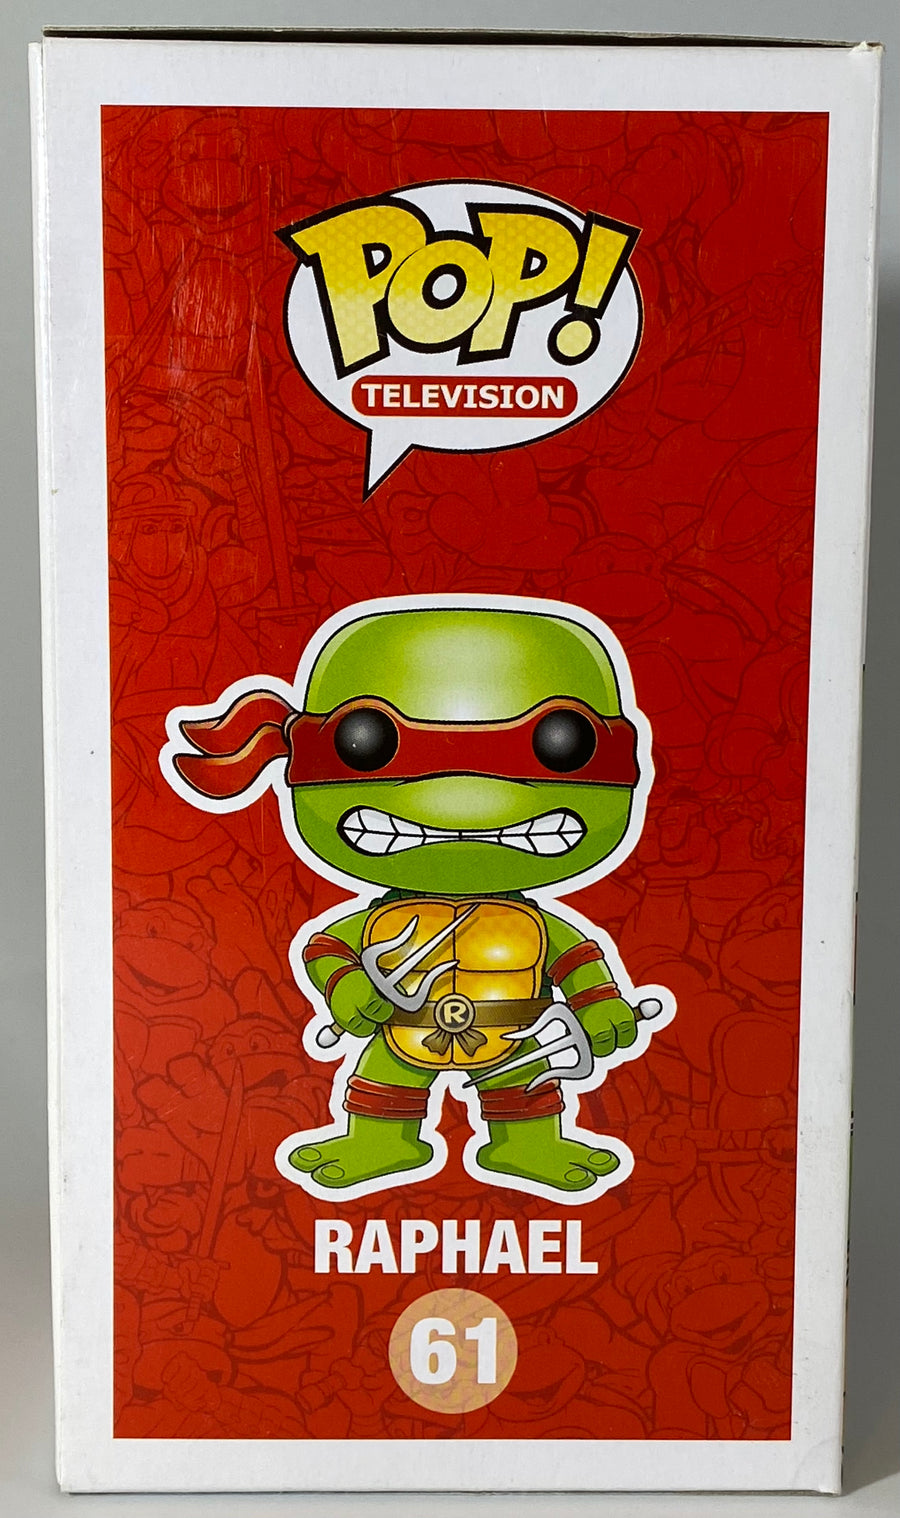 Teenage Mutant Ninja Turtles #61 Raphael (Metallic) 2013 SDCC Exclusive 1,008pc Funko Pop